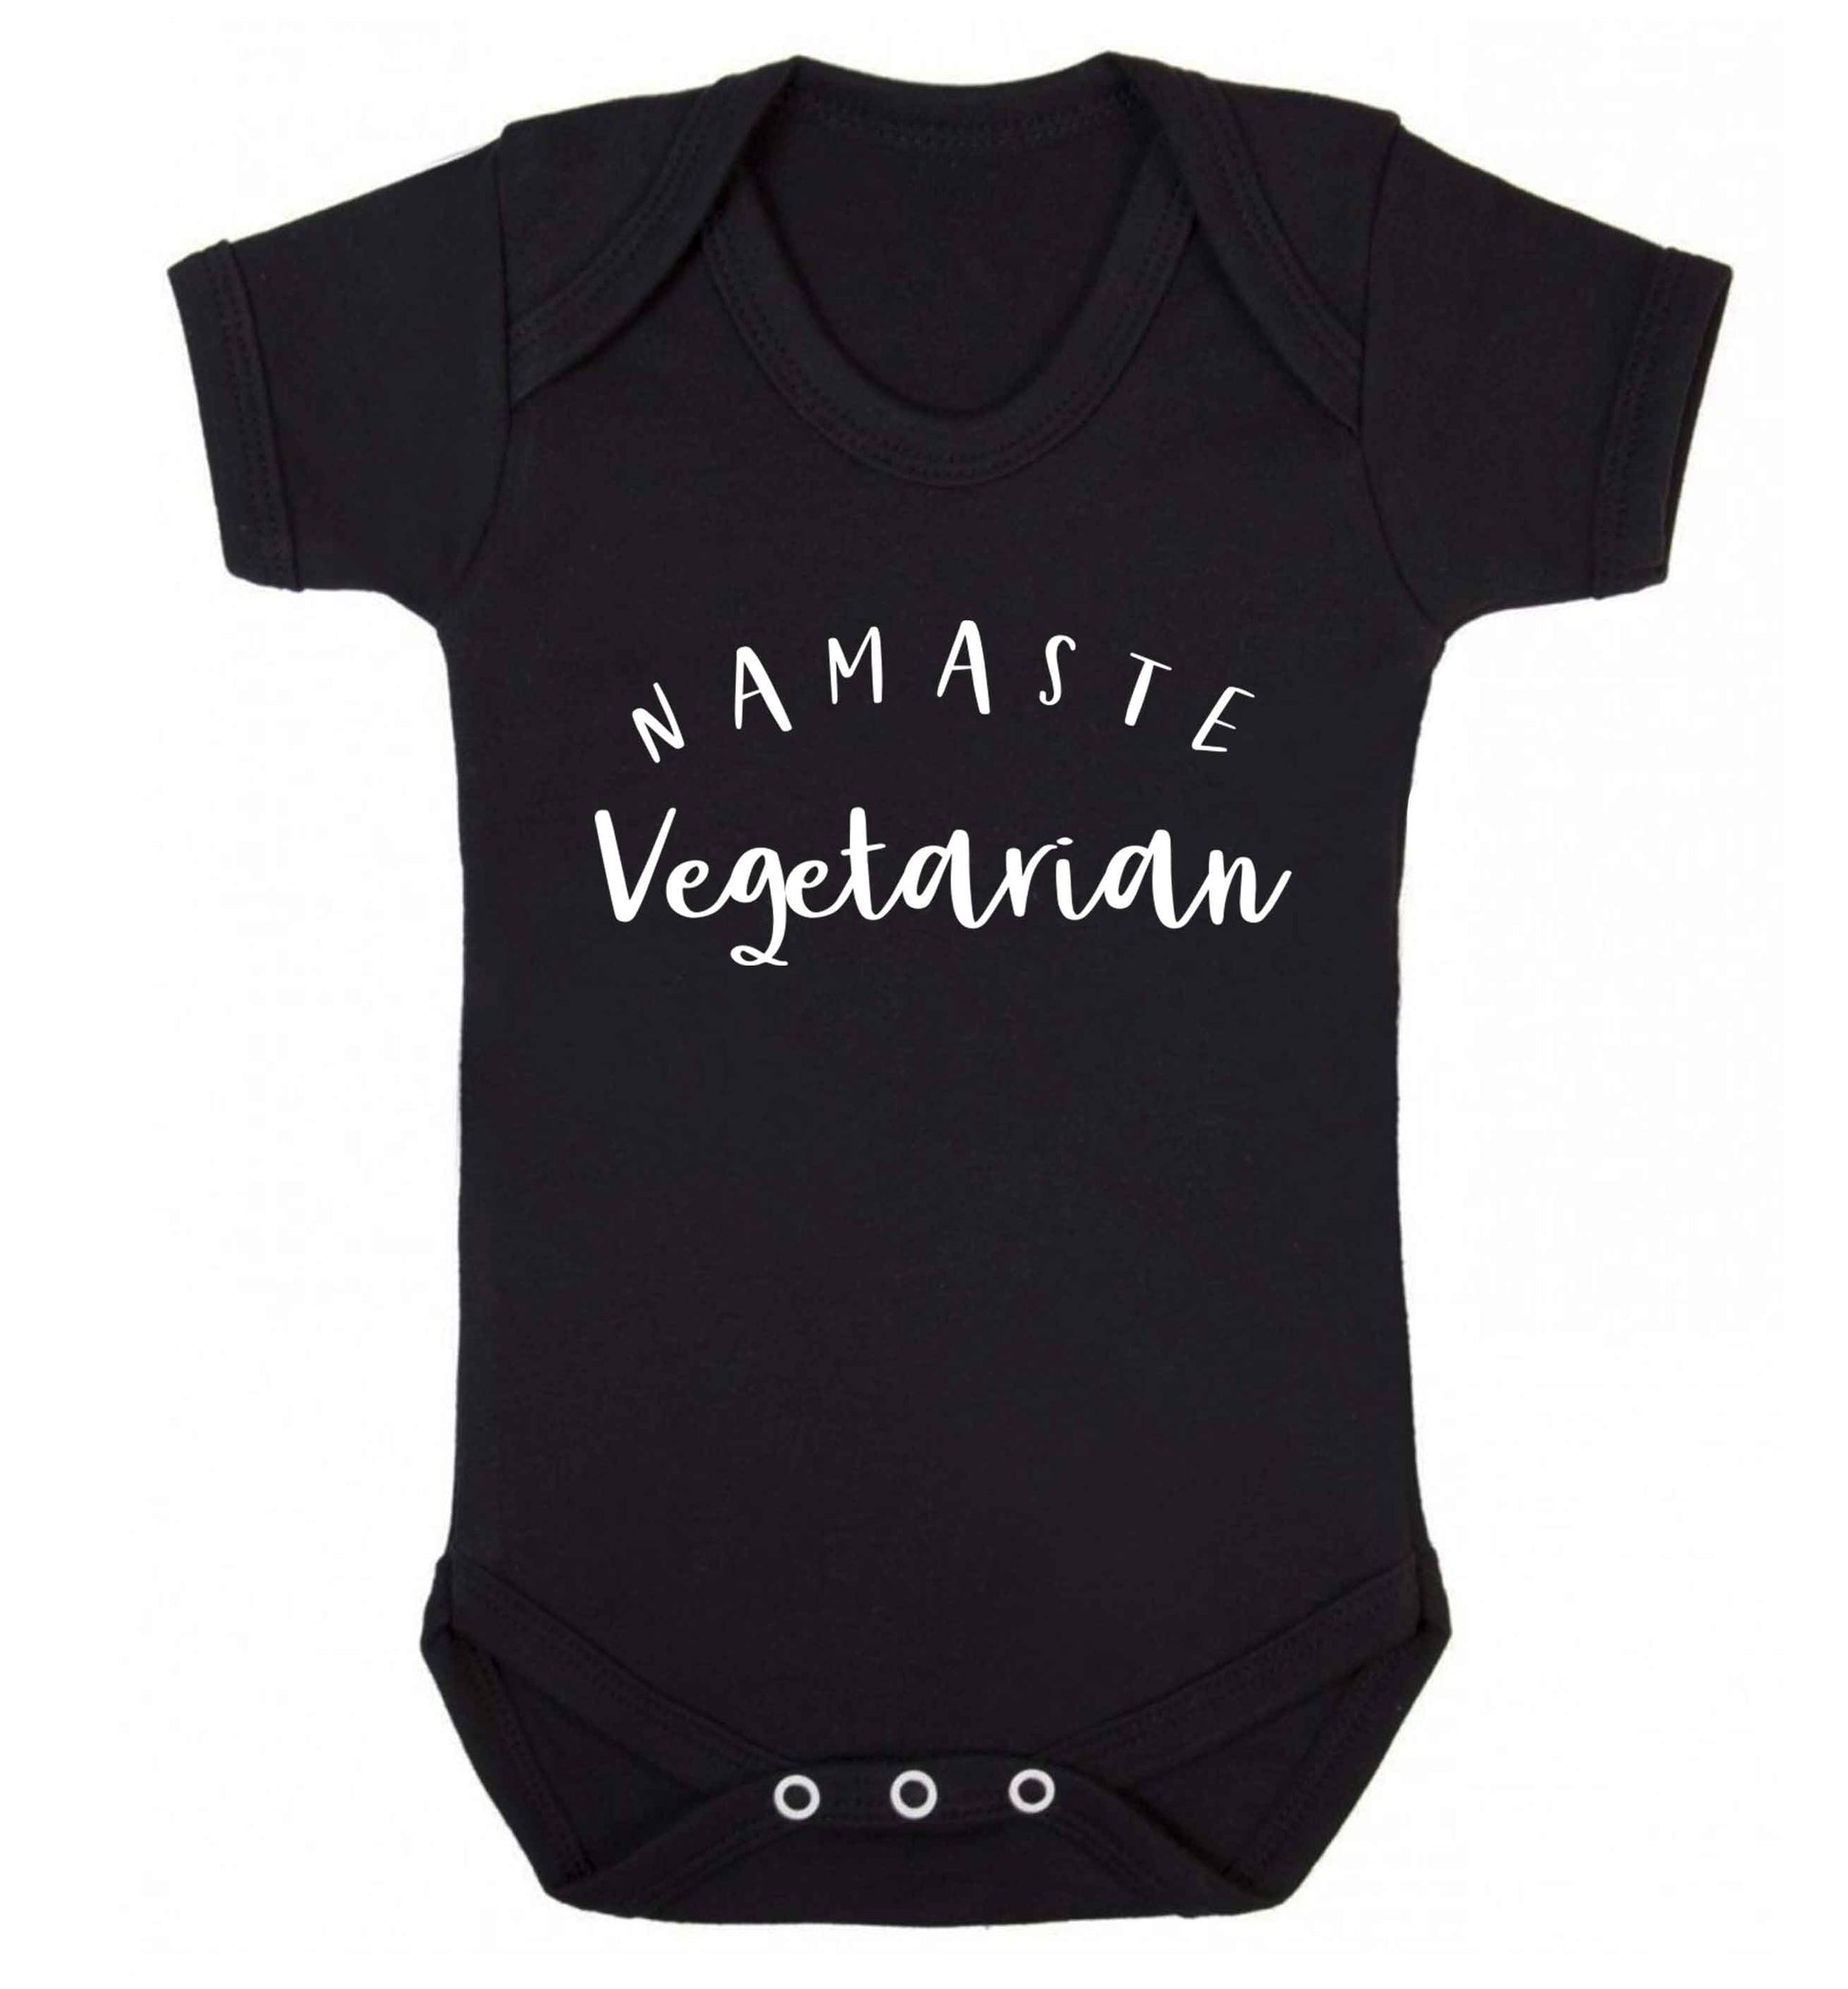 Namaste vegetarian Baby Vest black 18-24 months